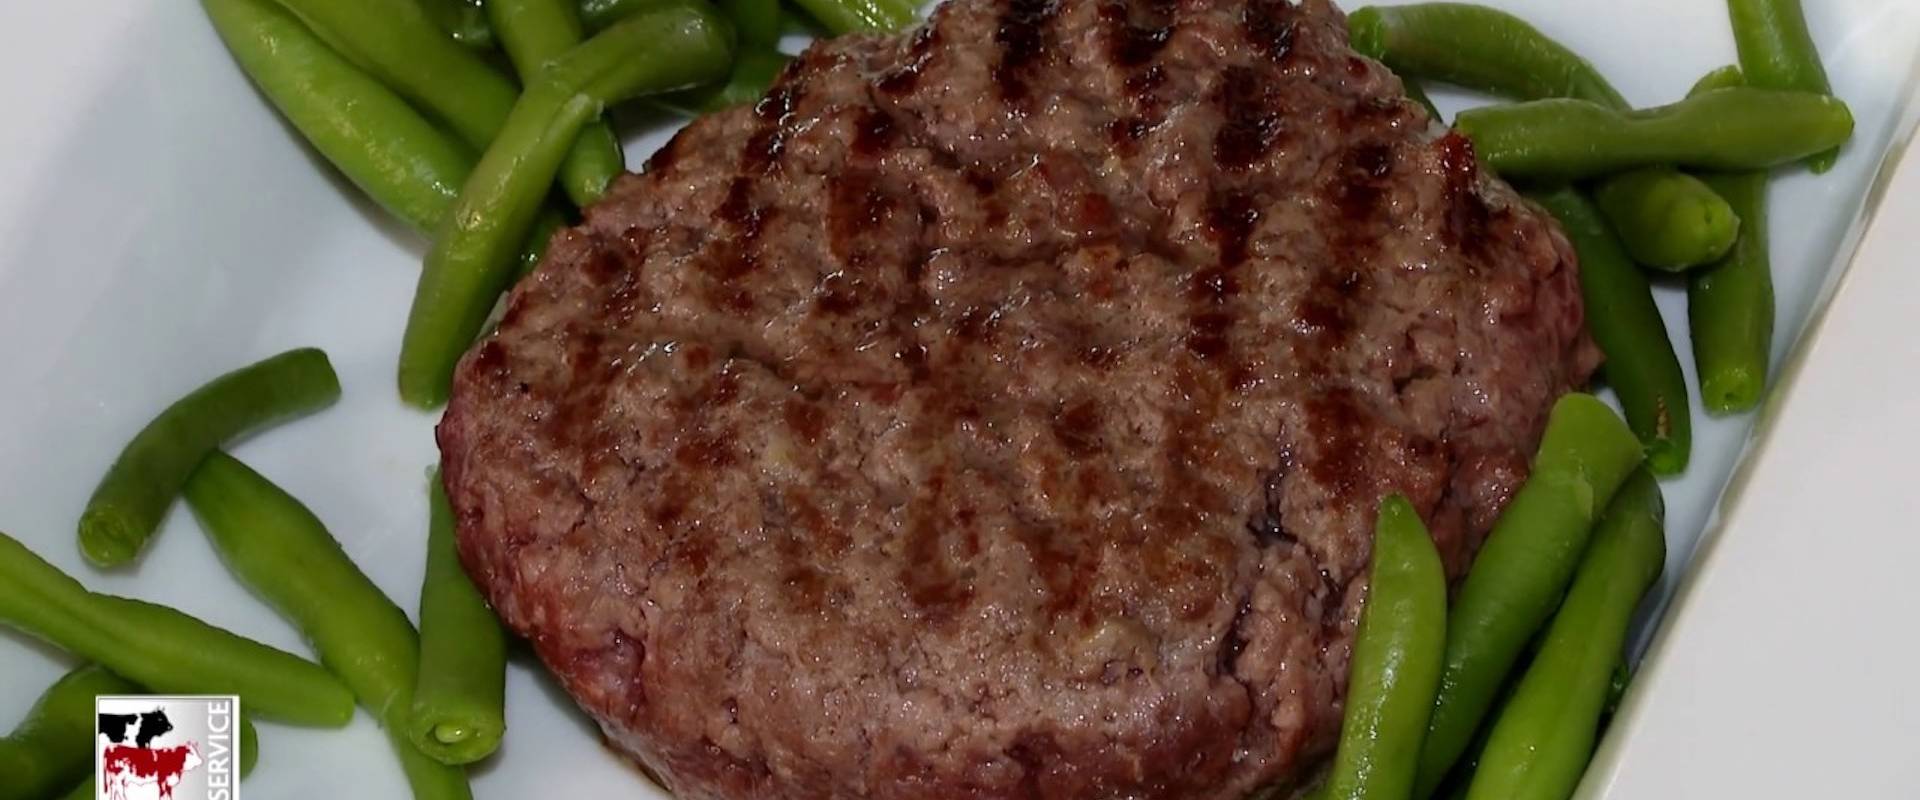 Ricetta hamburger di carne valdostana